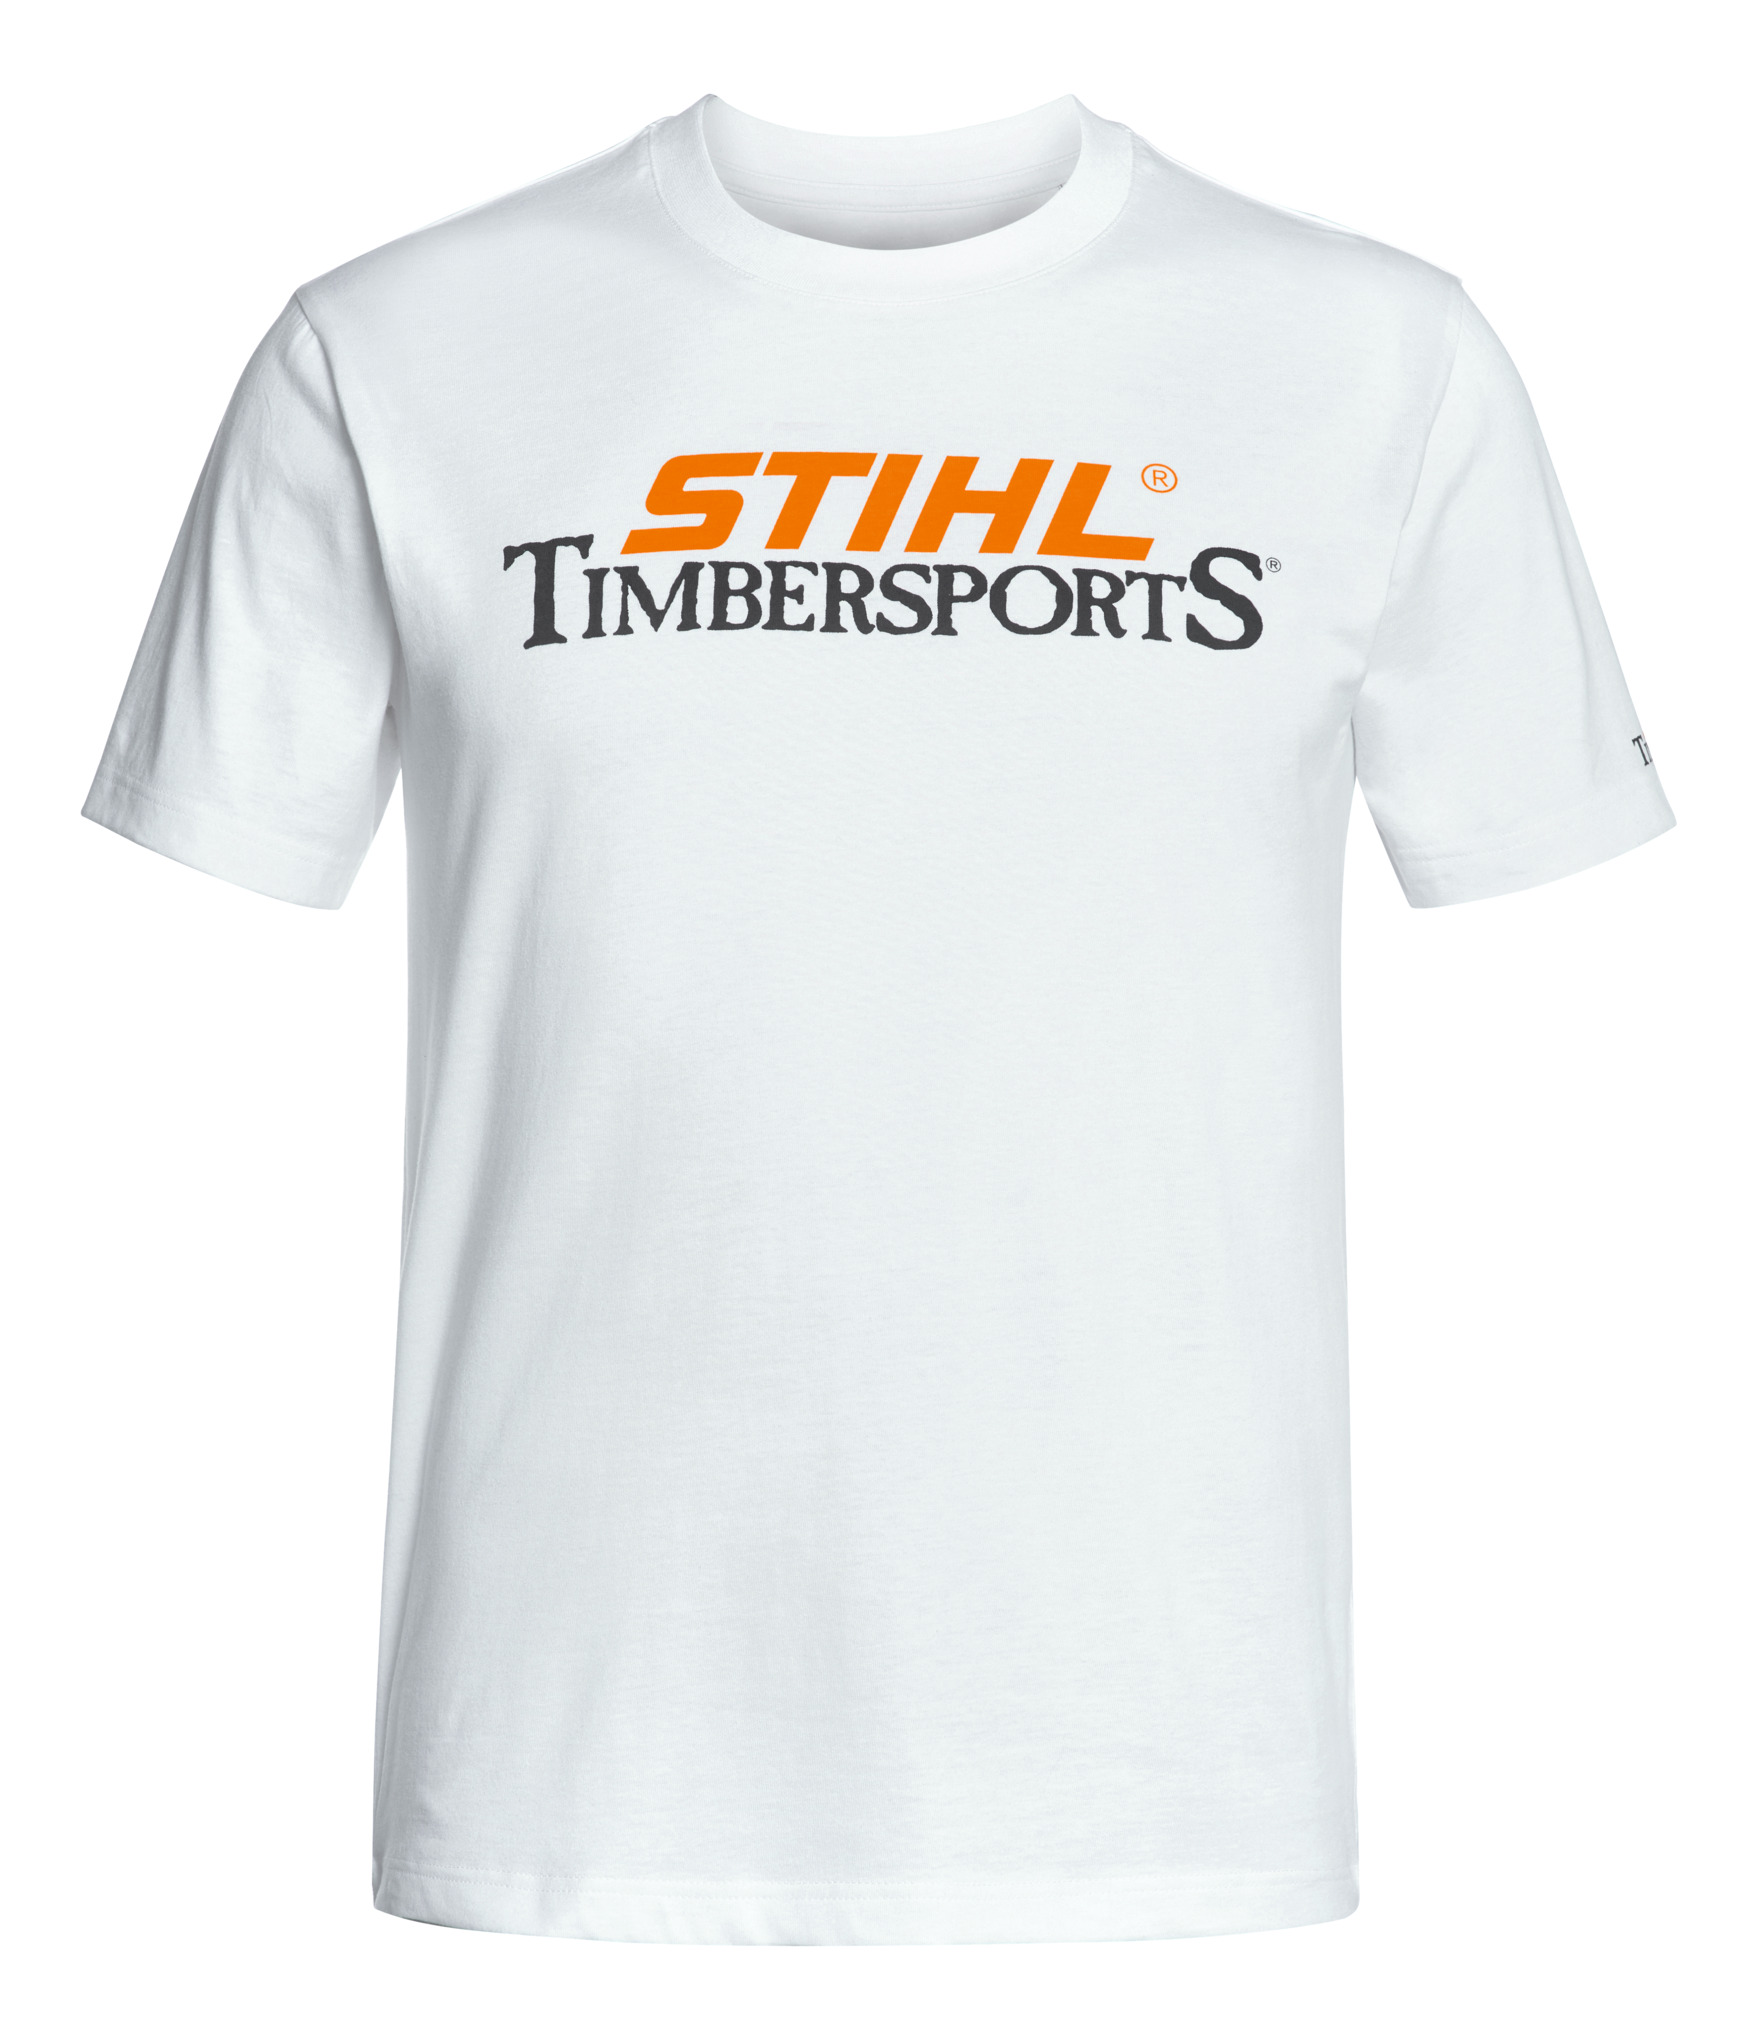 T-shirt TIMBERSPORTS ® blanc